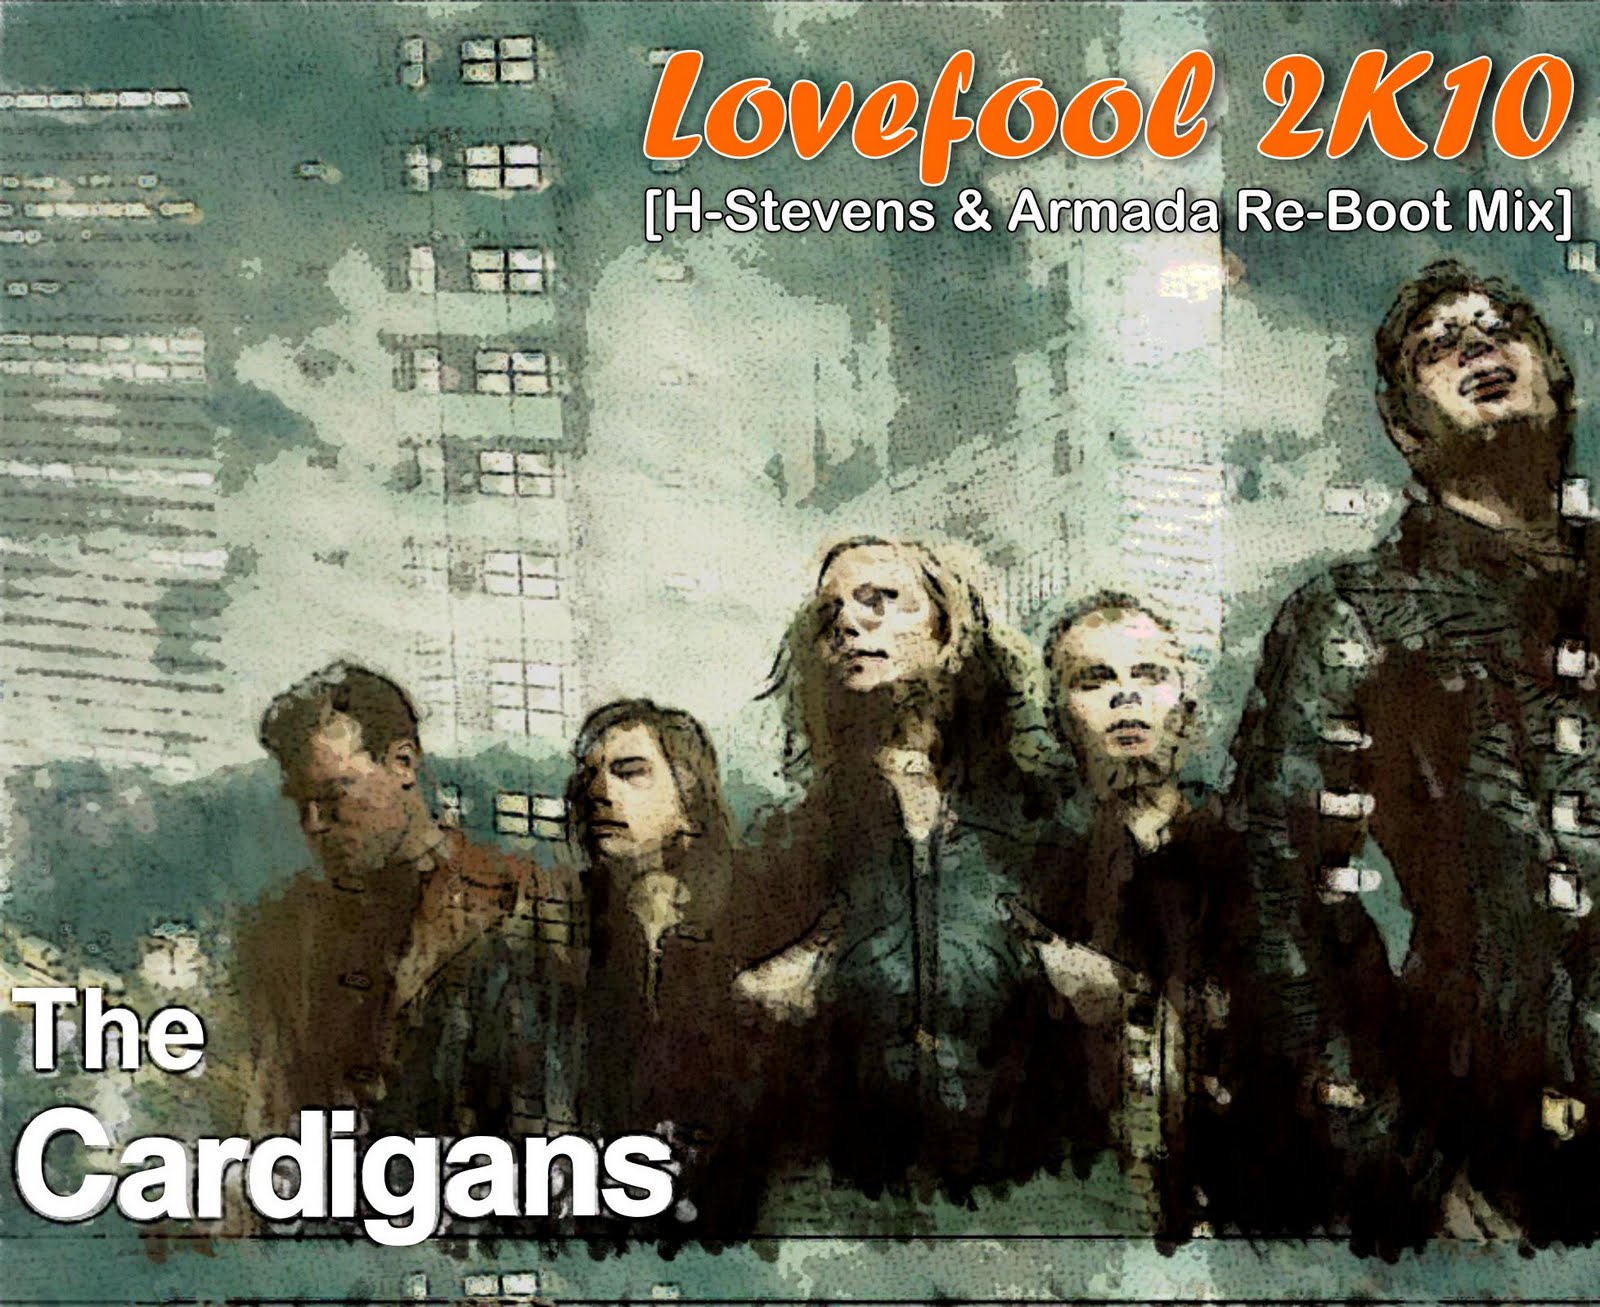 http://3.bp.blogspot.com/_rF_VQb3ztD4/TCVeoR7yTII/AAAAAAAACjs/lnFy2QHW5fc/s1600/The+Cardigans+-+Lovefool+2k10+%5BH-Stevens+%26+Armada+Re-Boot+Mix%5D.JPG